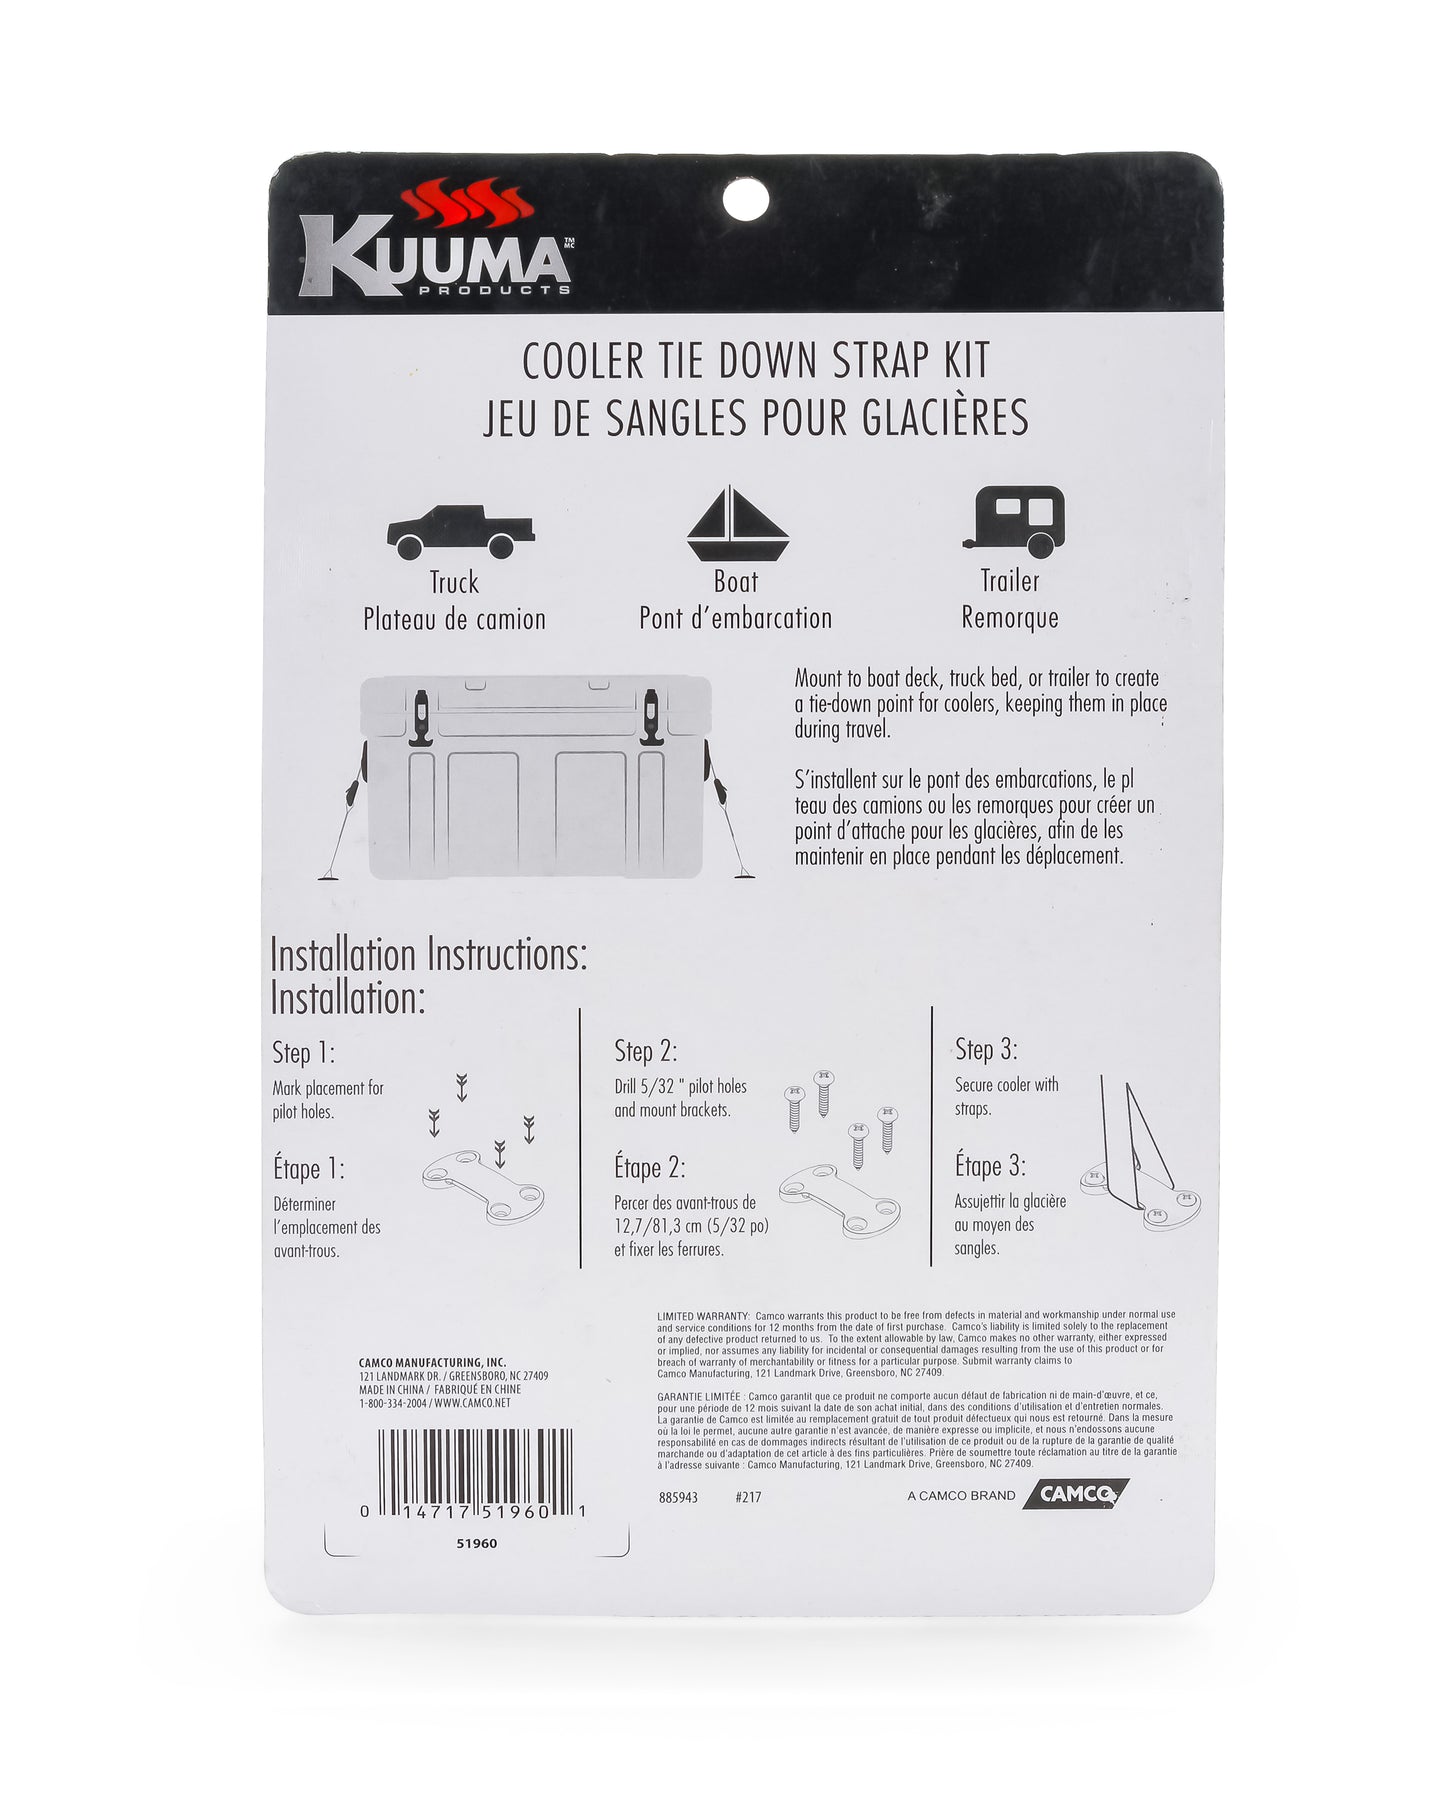 Kuuma Premium Cooler Tie Down Strap Kit